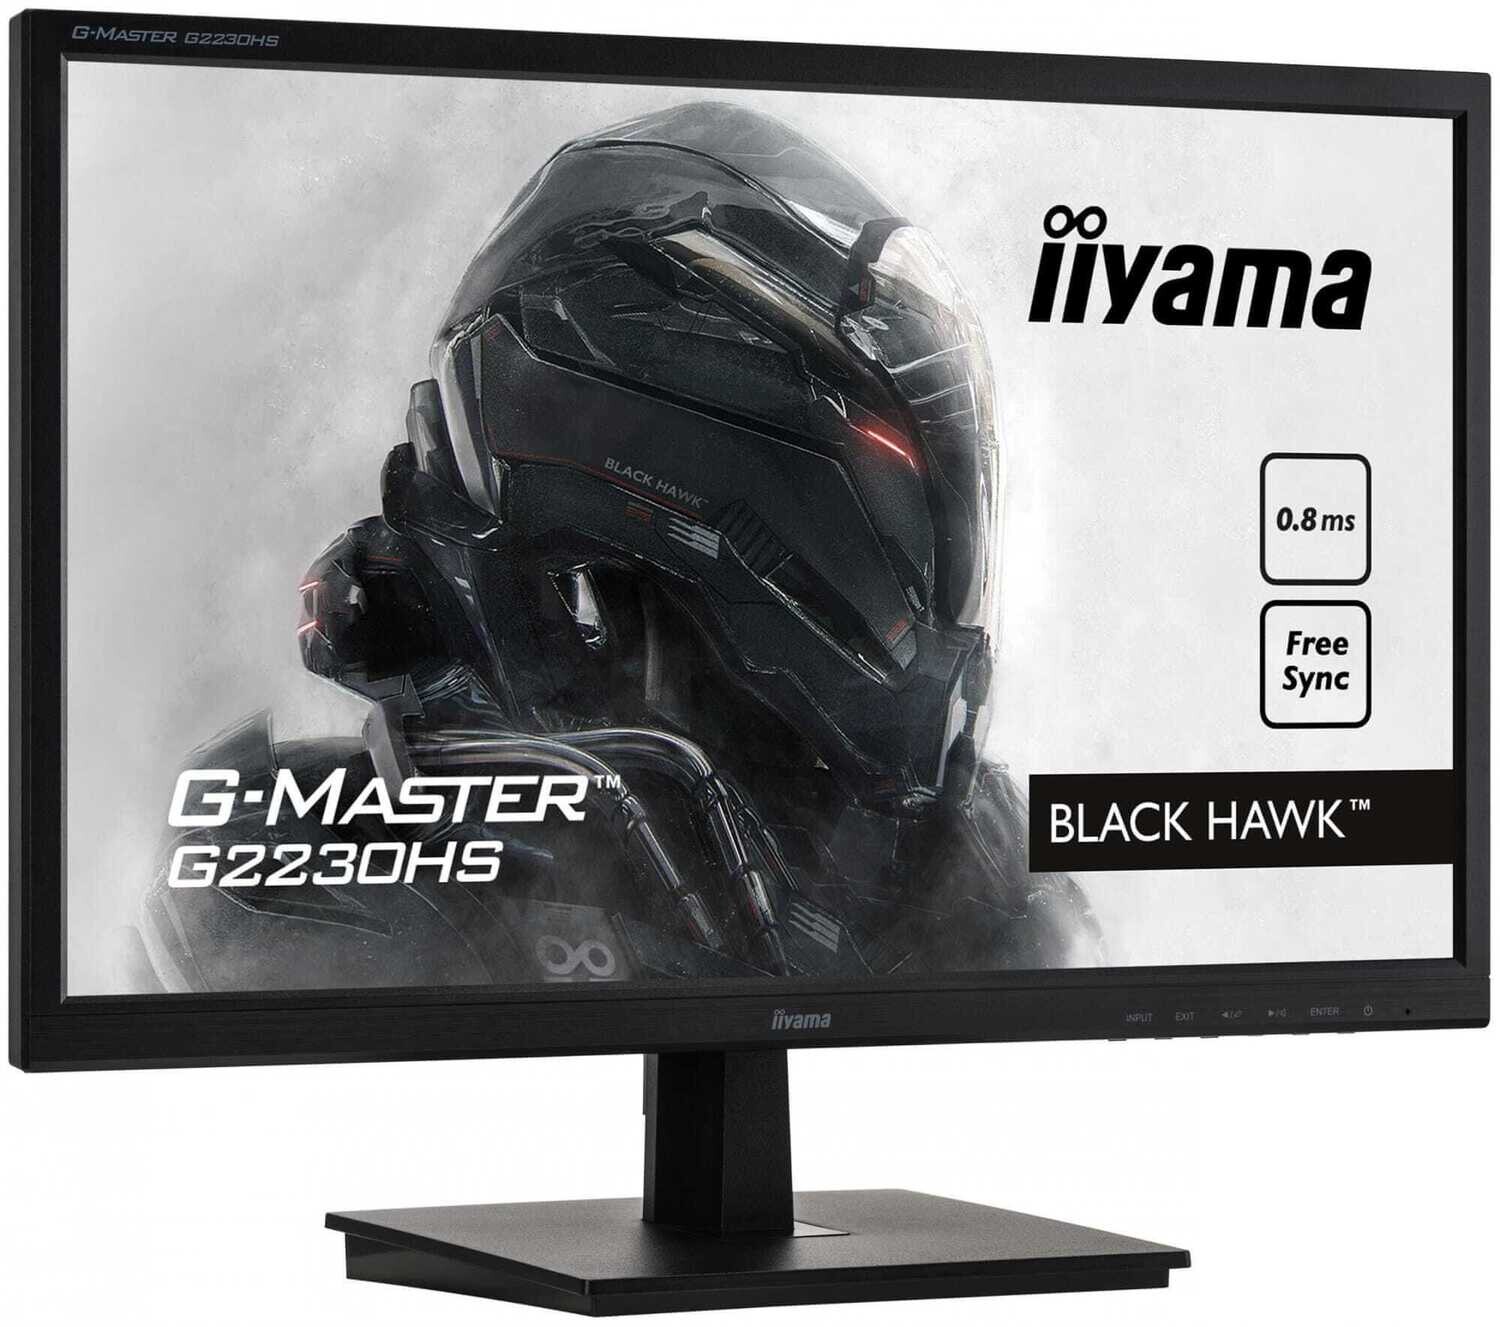 Iiyama 21,5" Gaming, G-Master Black Hawk, FreeSync, 1920x1080@75Hz, 250cd/m², DVI, HDMI, 0,8ms, Speakers, Black Tune